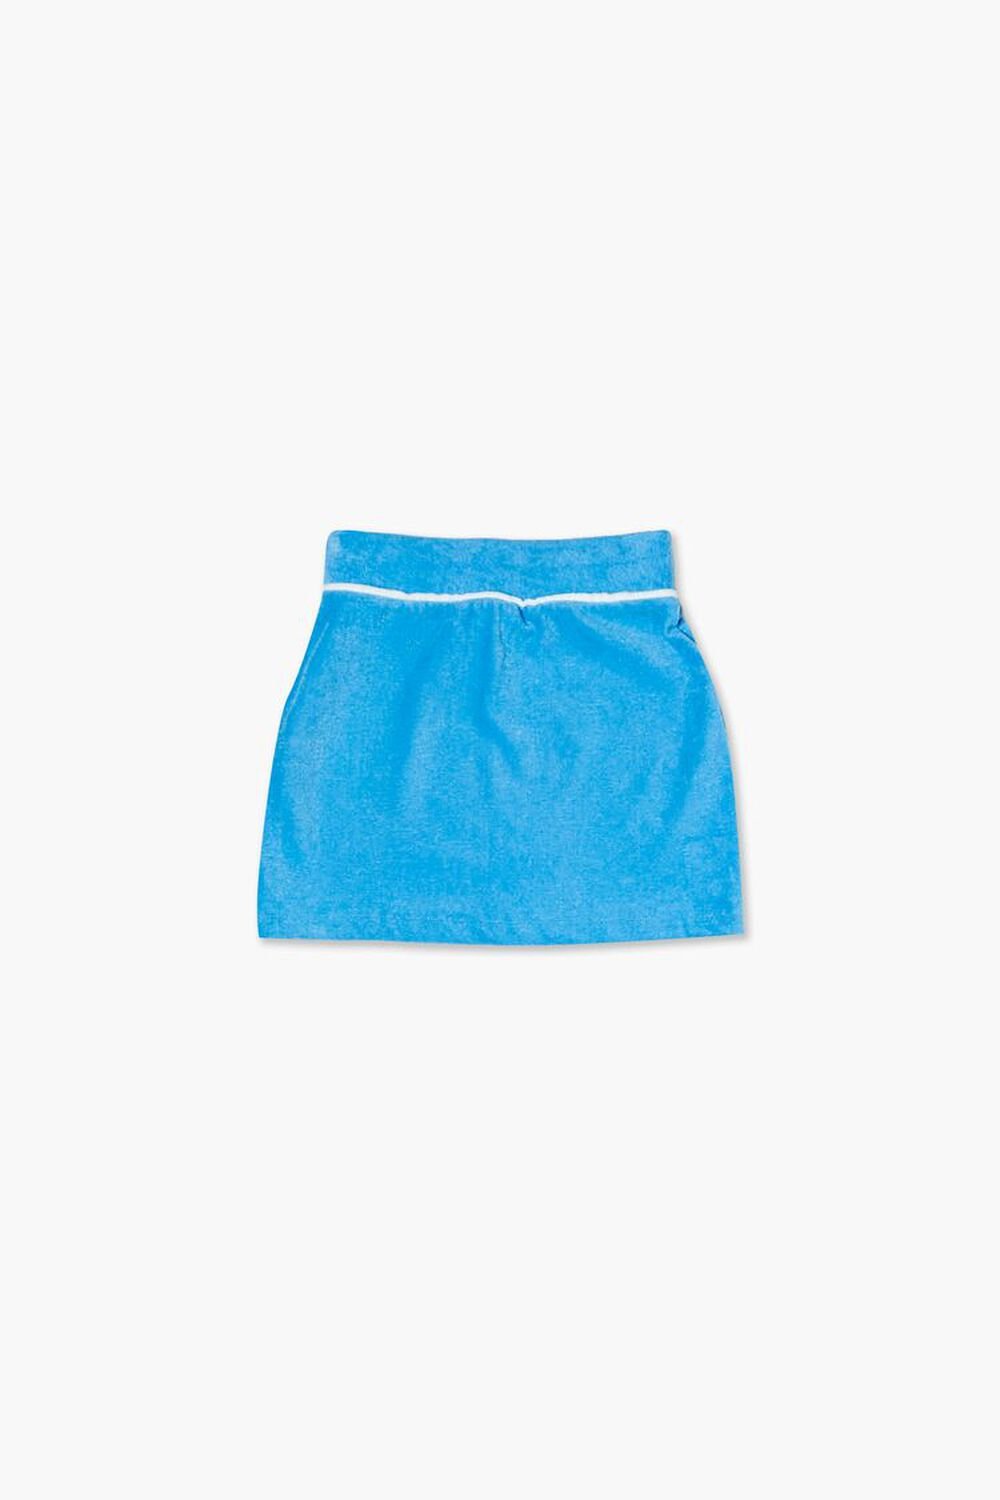 BLUE Girls Seamless Skirt (Kids), image 2